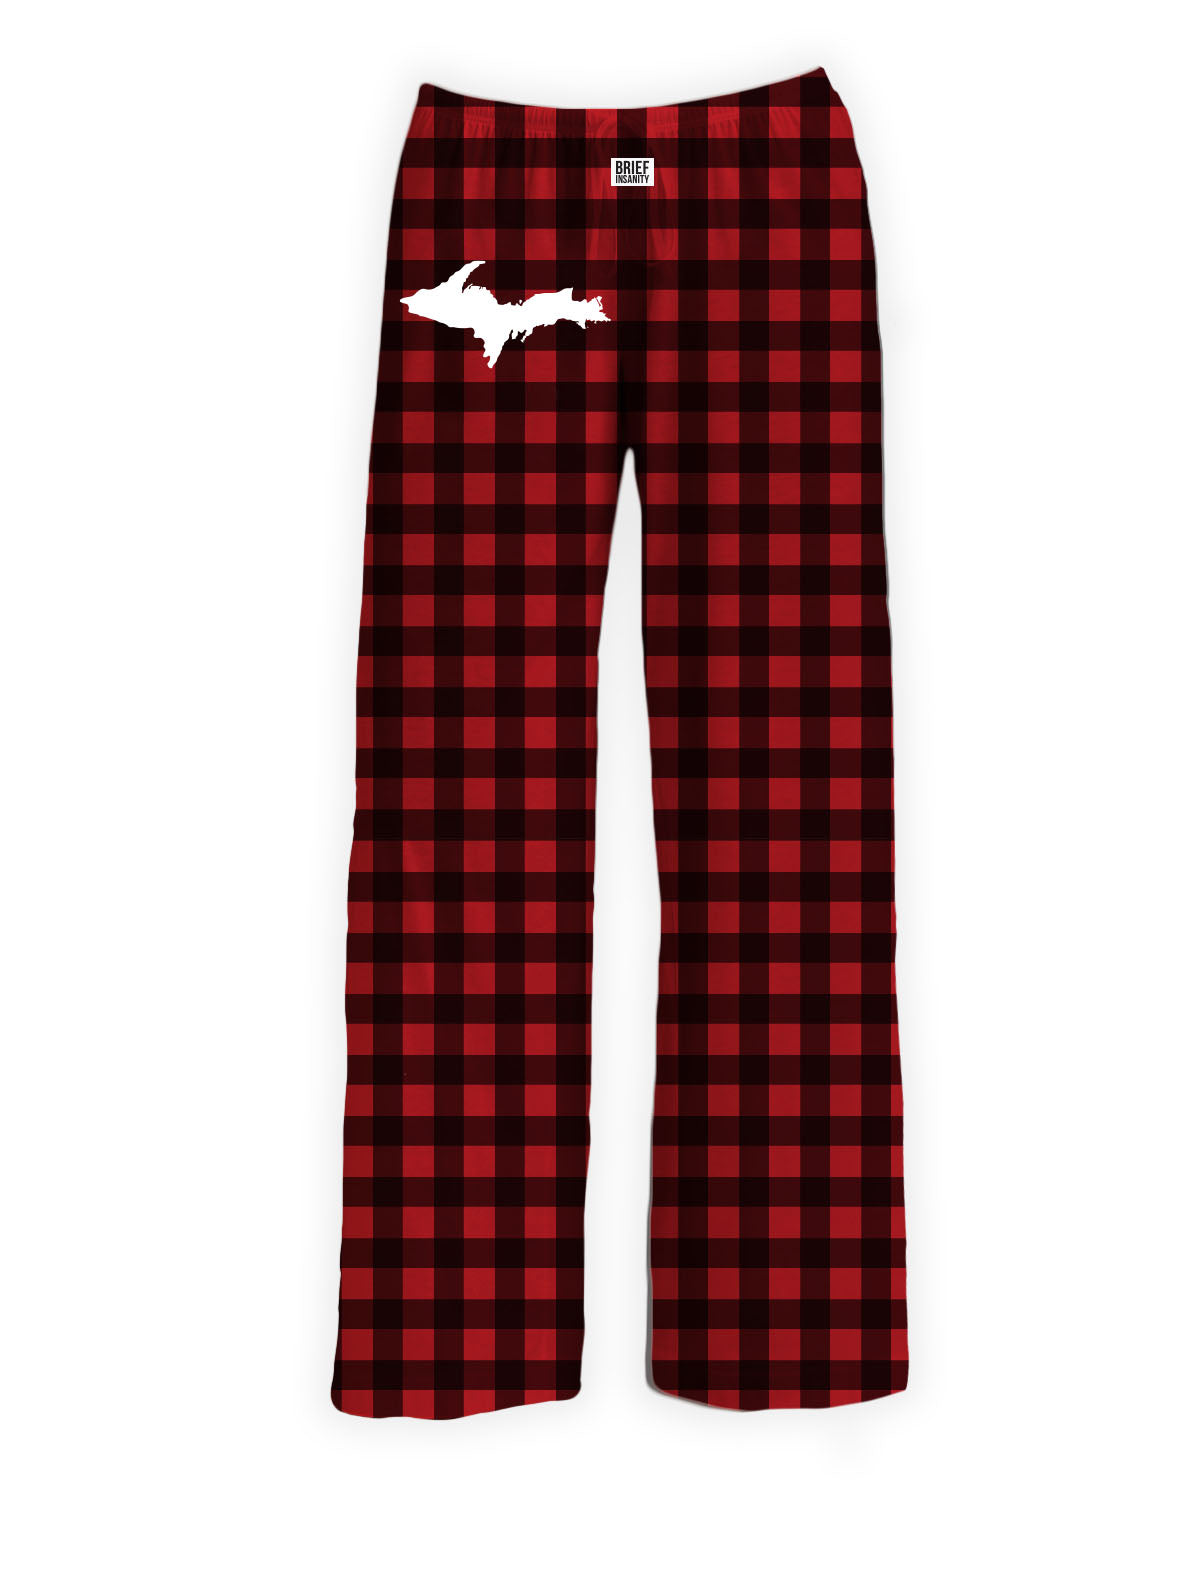 BRIEF INSANITY Upper Peninsula Michigan Pajama Lounge Pants